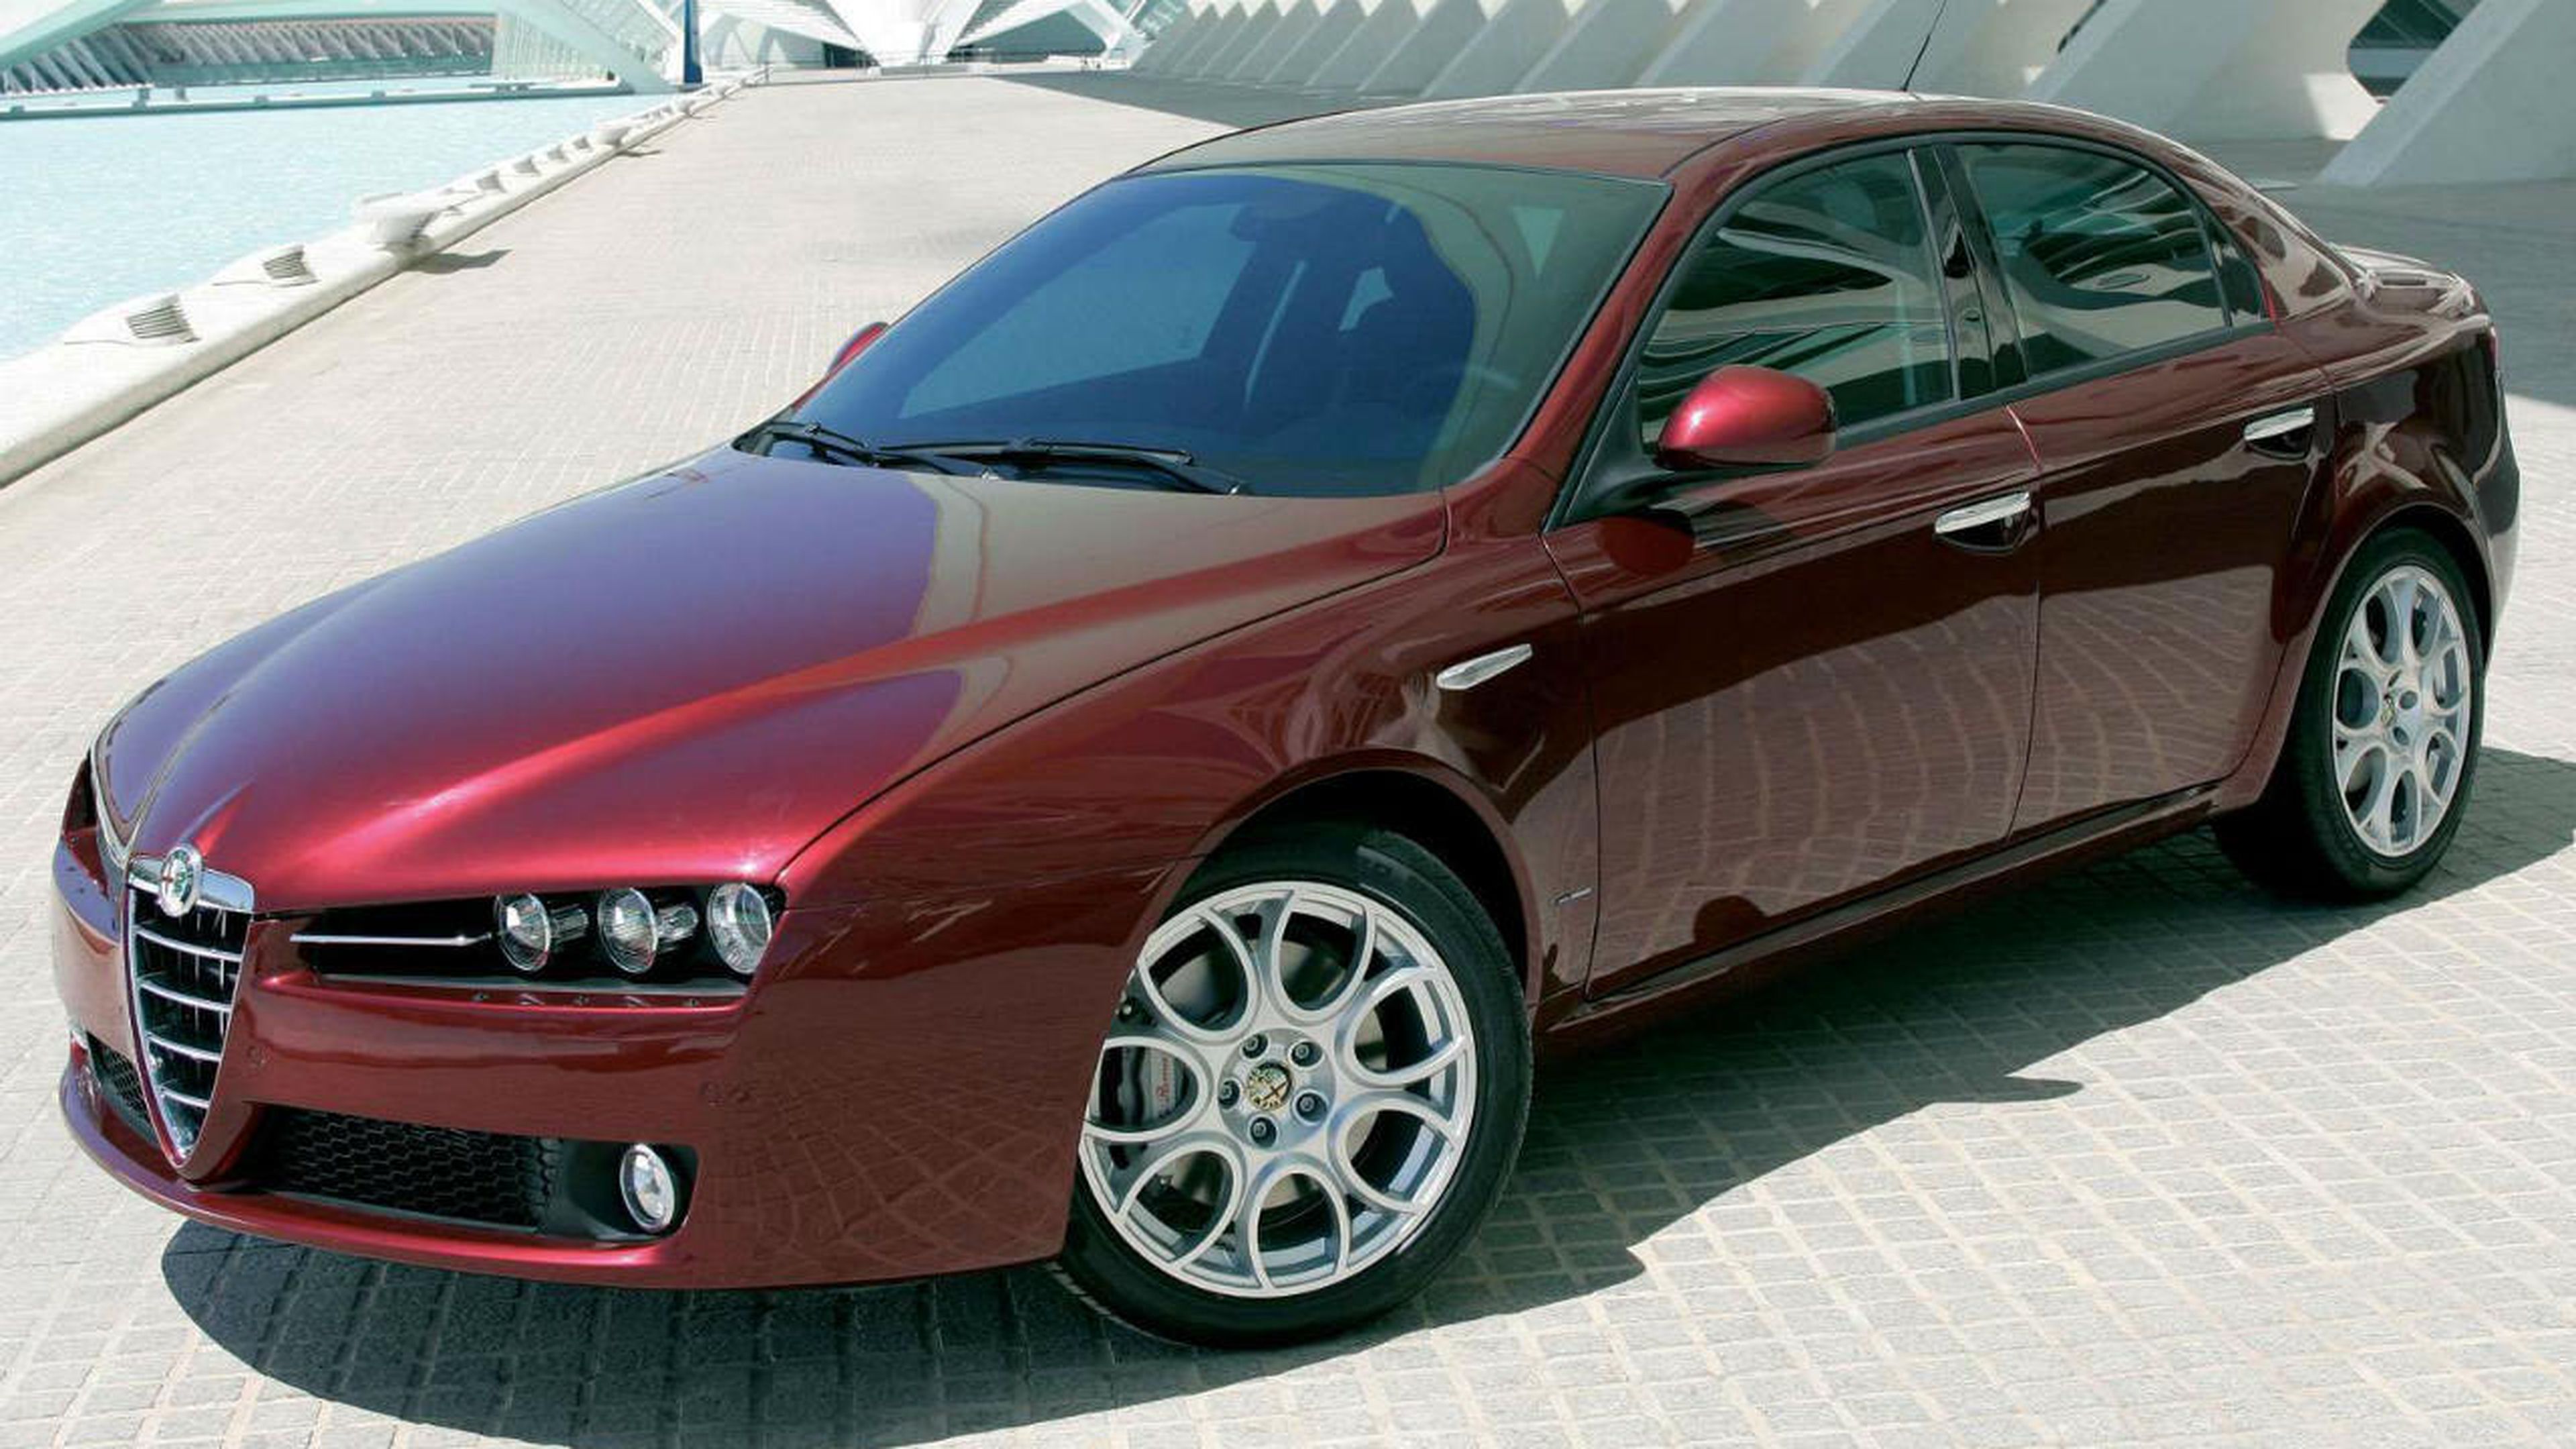 Cuál fue mejor, el Alfa Romeo 159 o el BMW Serie 3 E90?